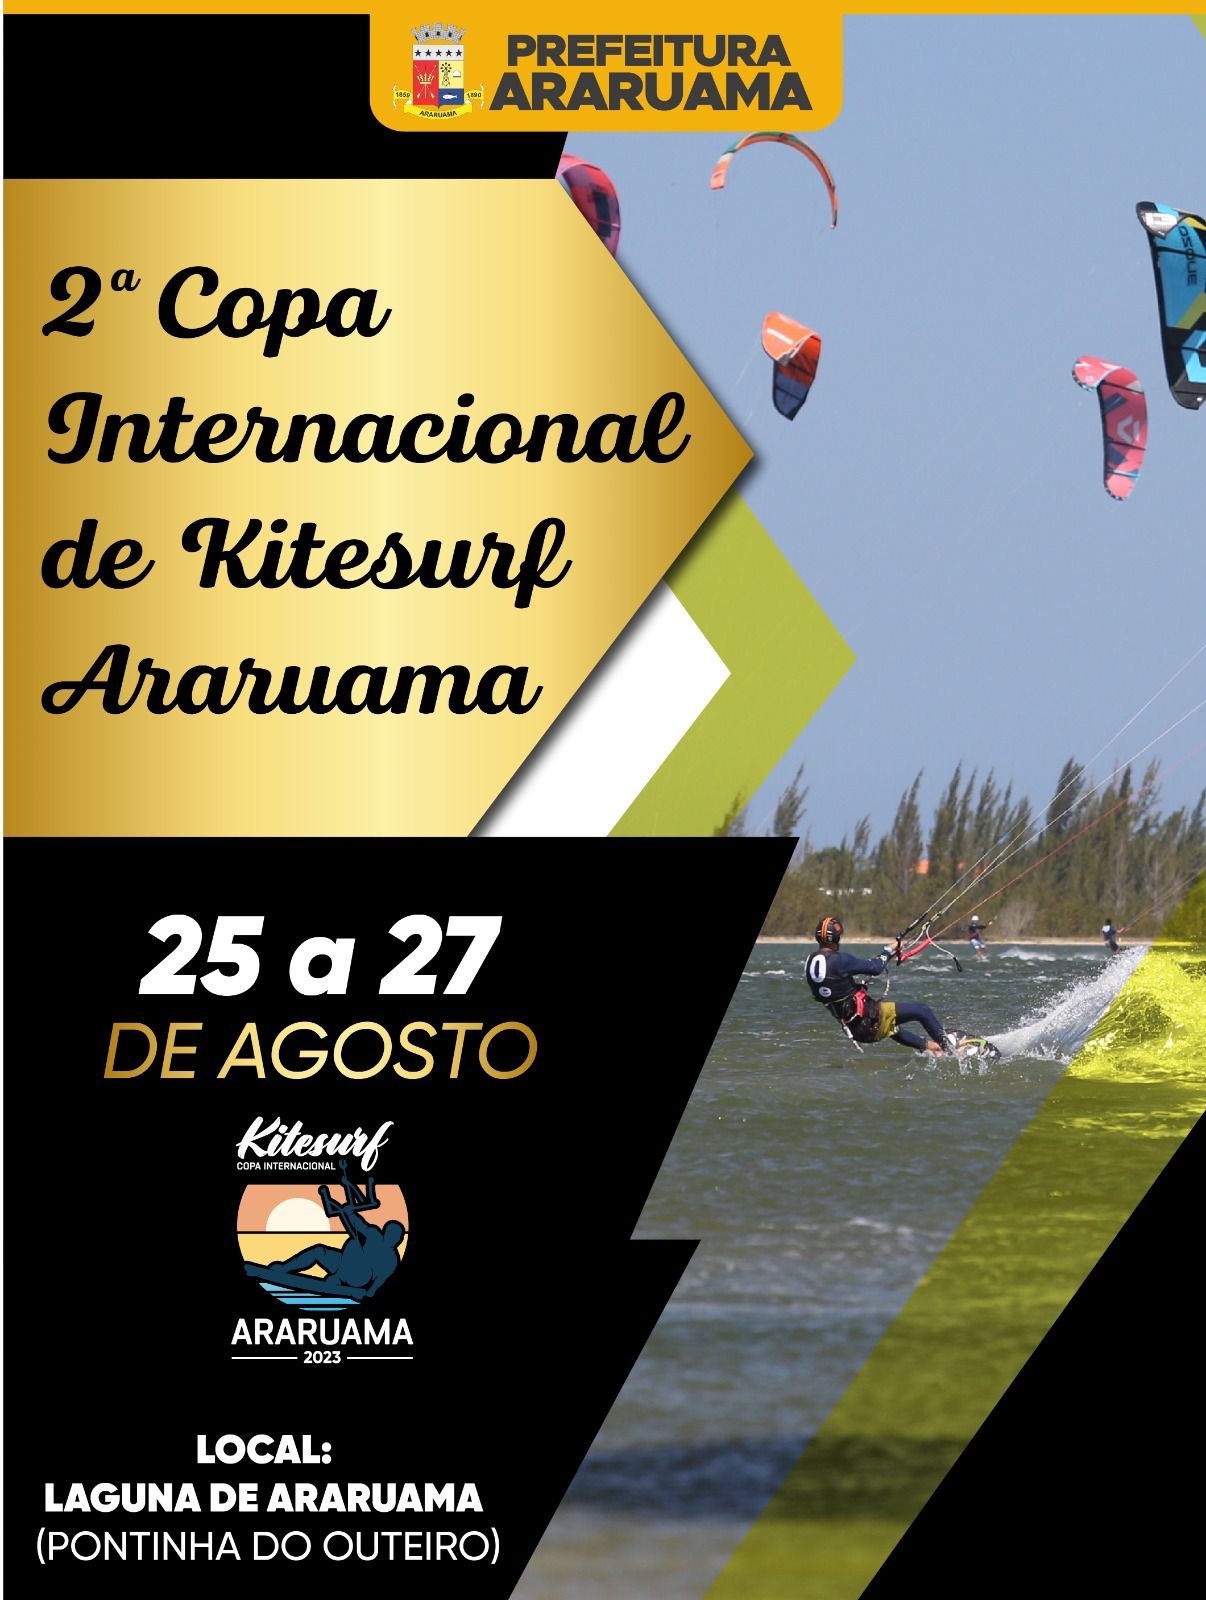 Prefeitura de Araruama vai realizar a 2ª Copa Internacional de Kitesurf